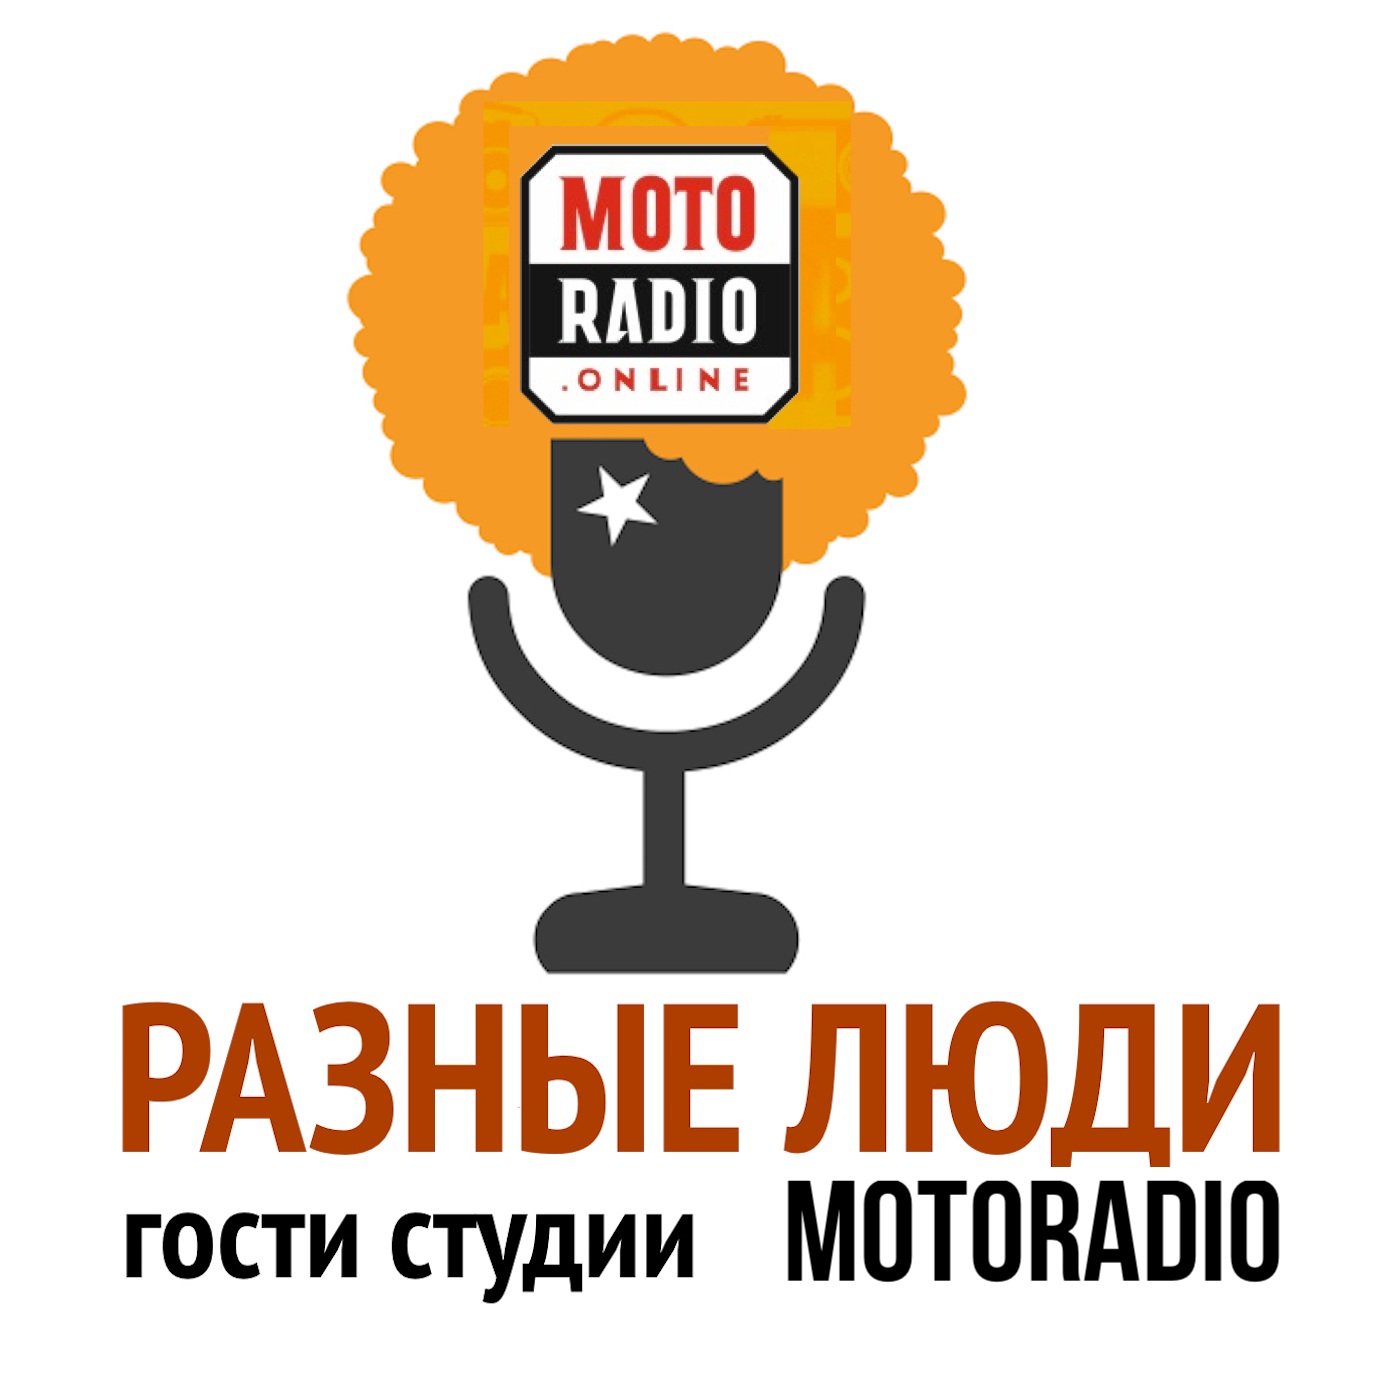 Моторадио Анастасия Курехина дала интервью Александру Сенину на Imagine Radio